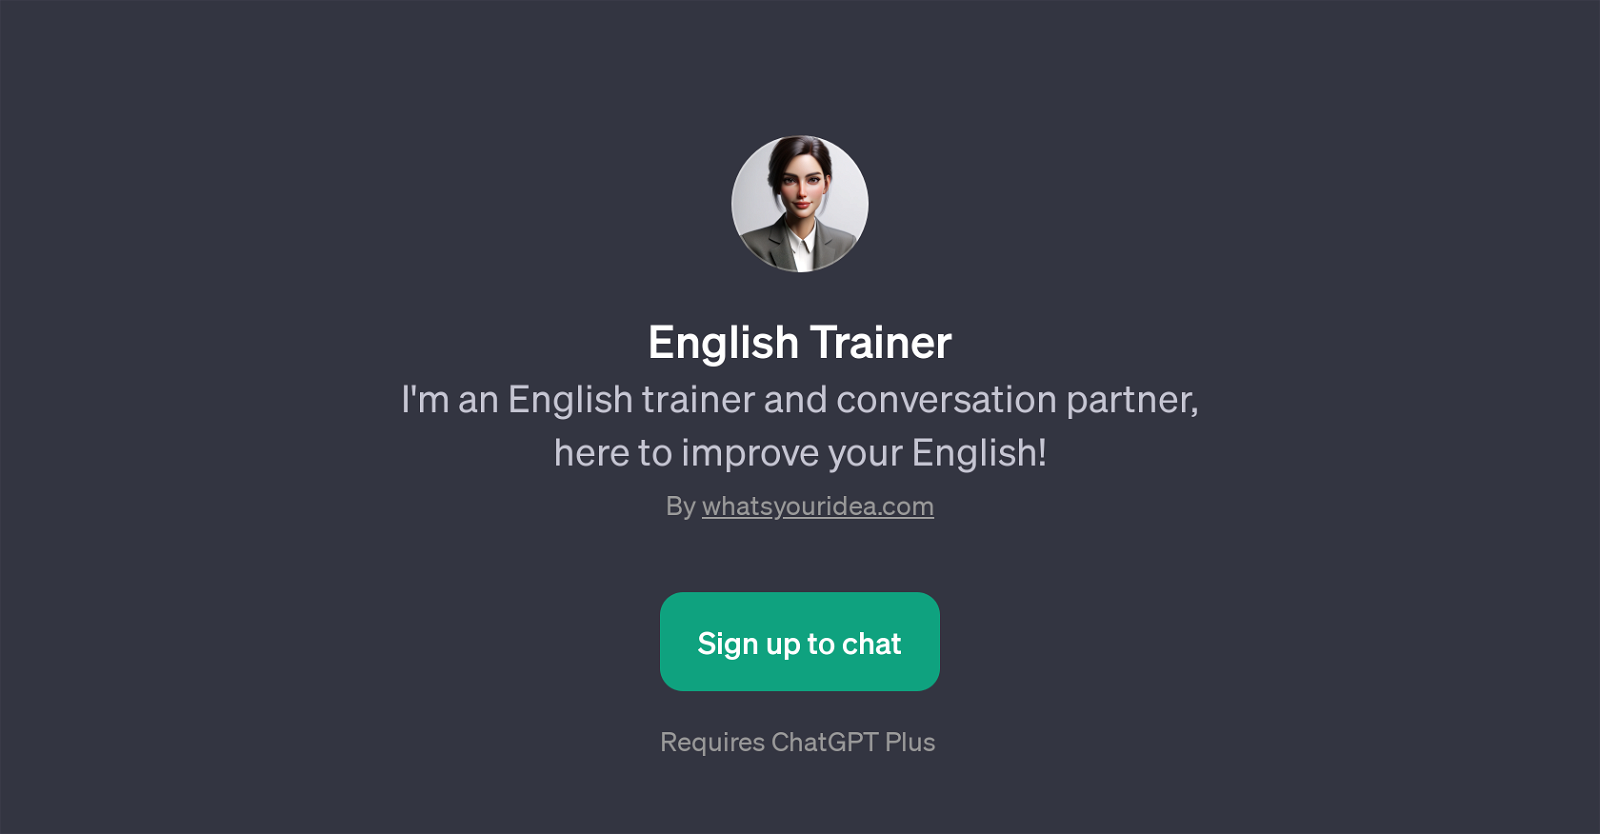 English Trainer website